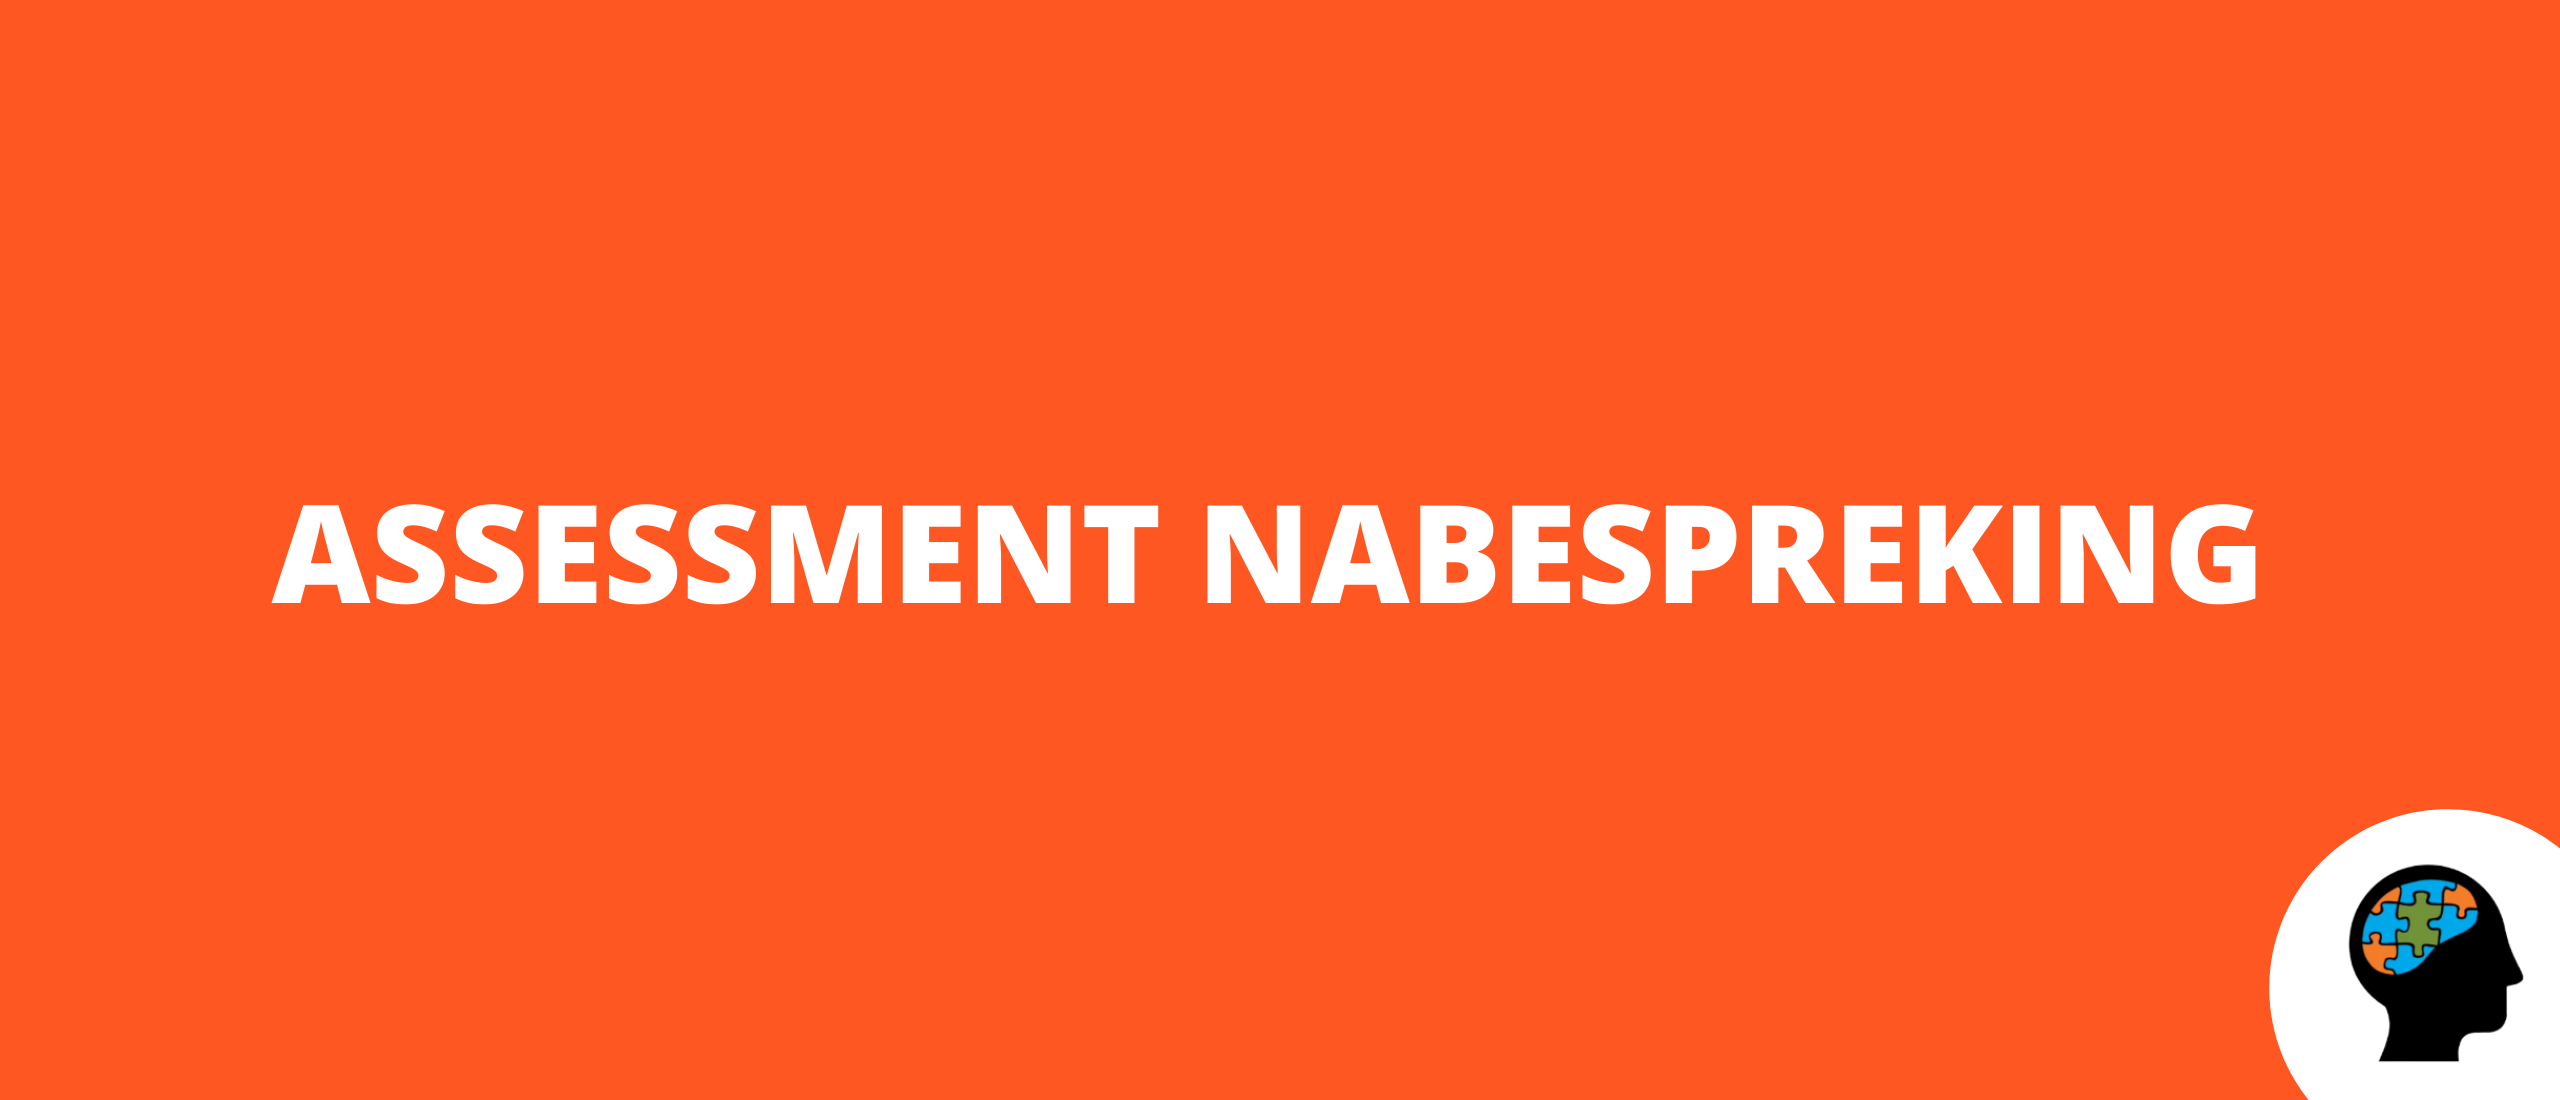 Assessment nabespreking